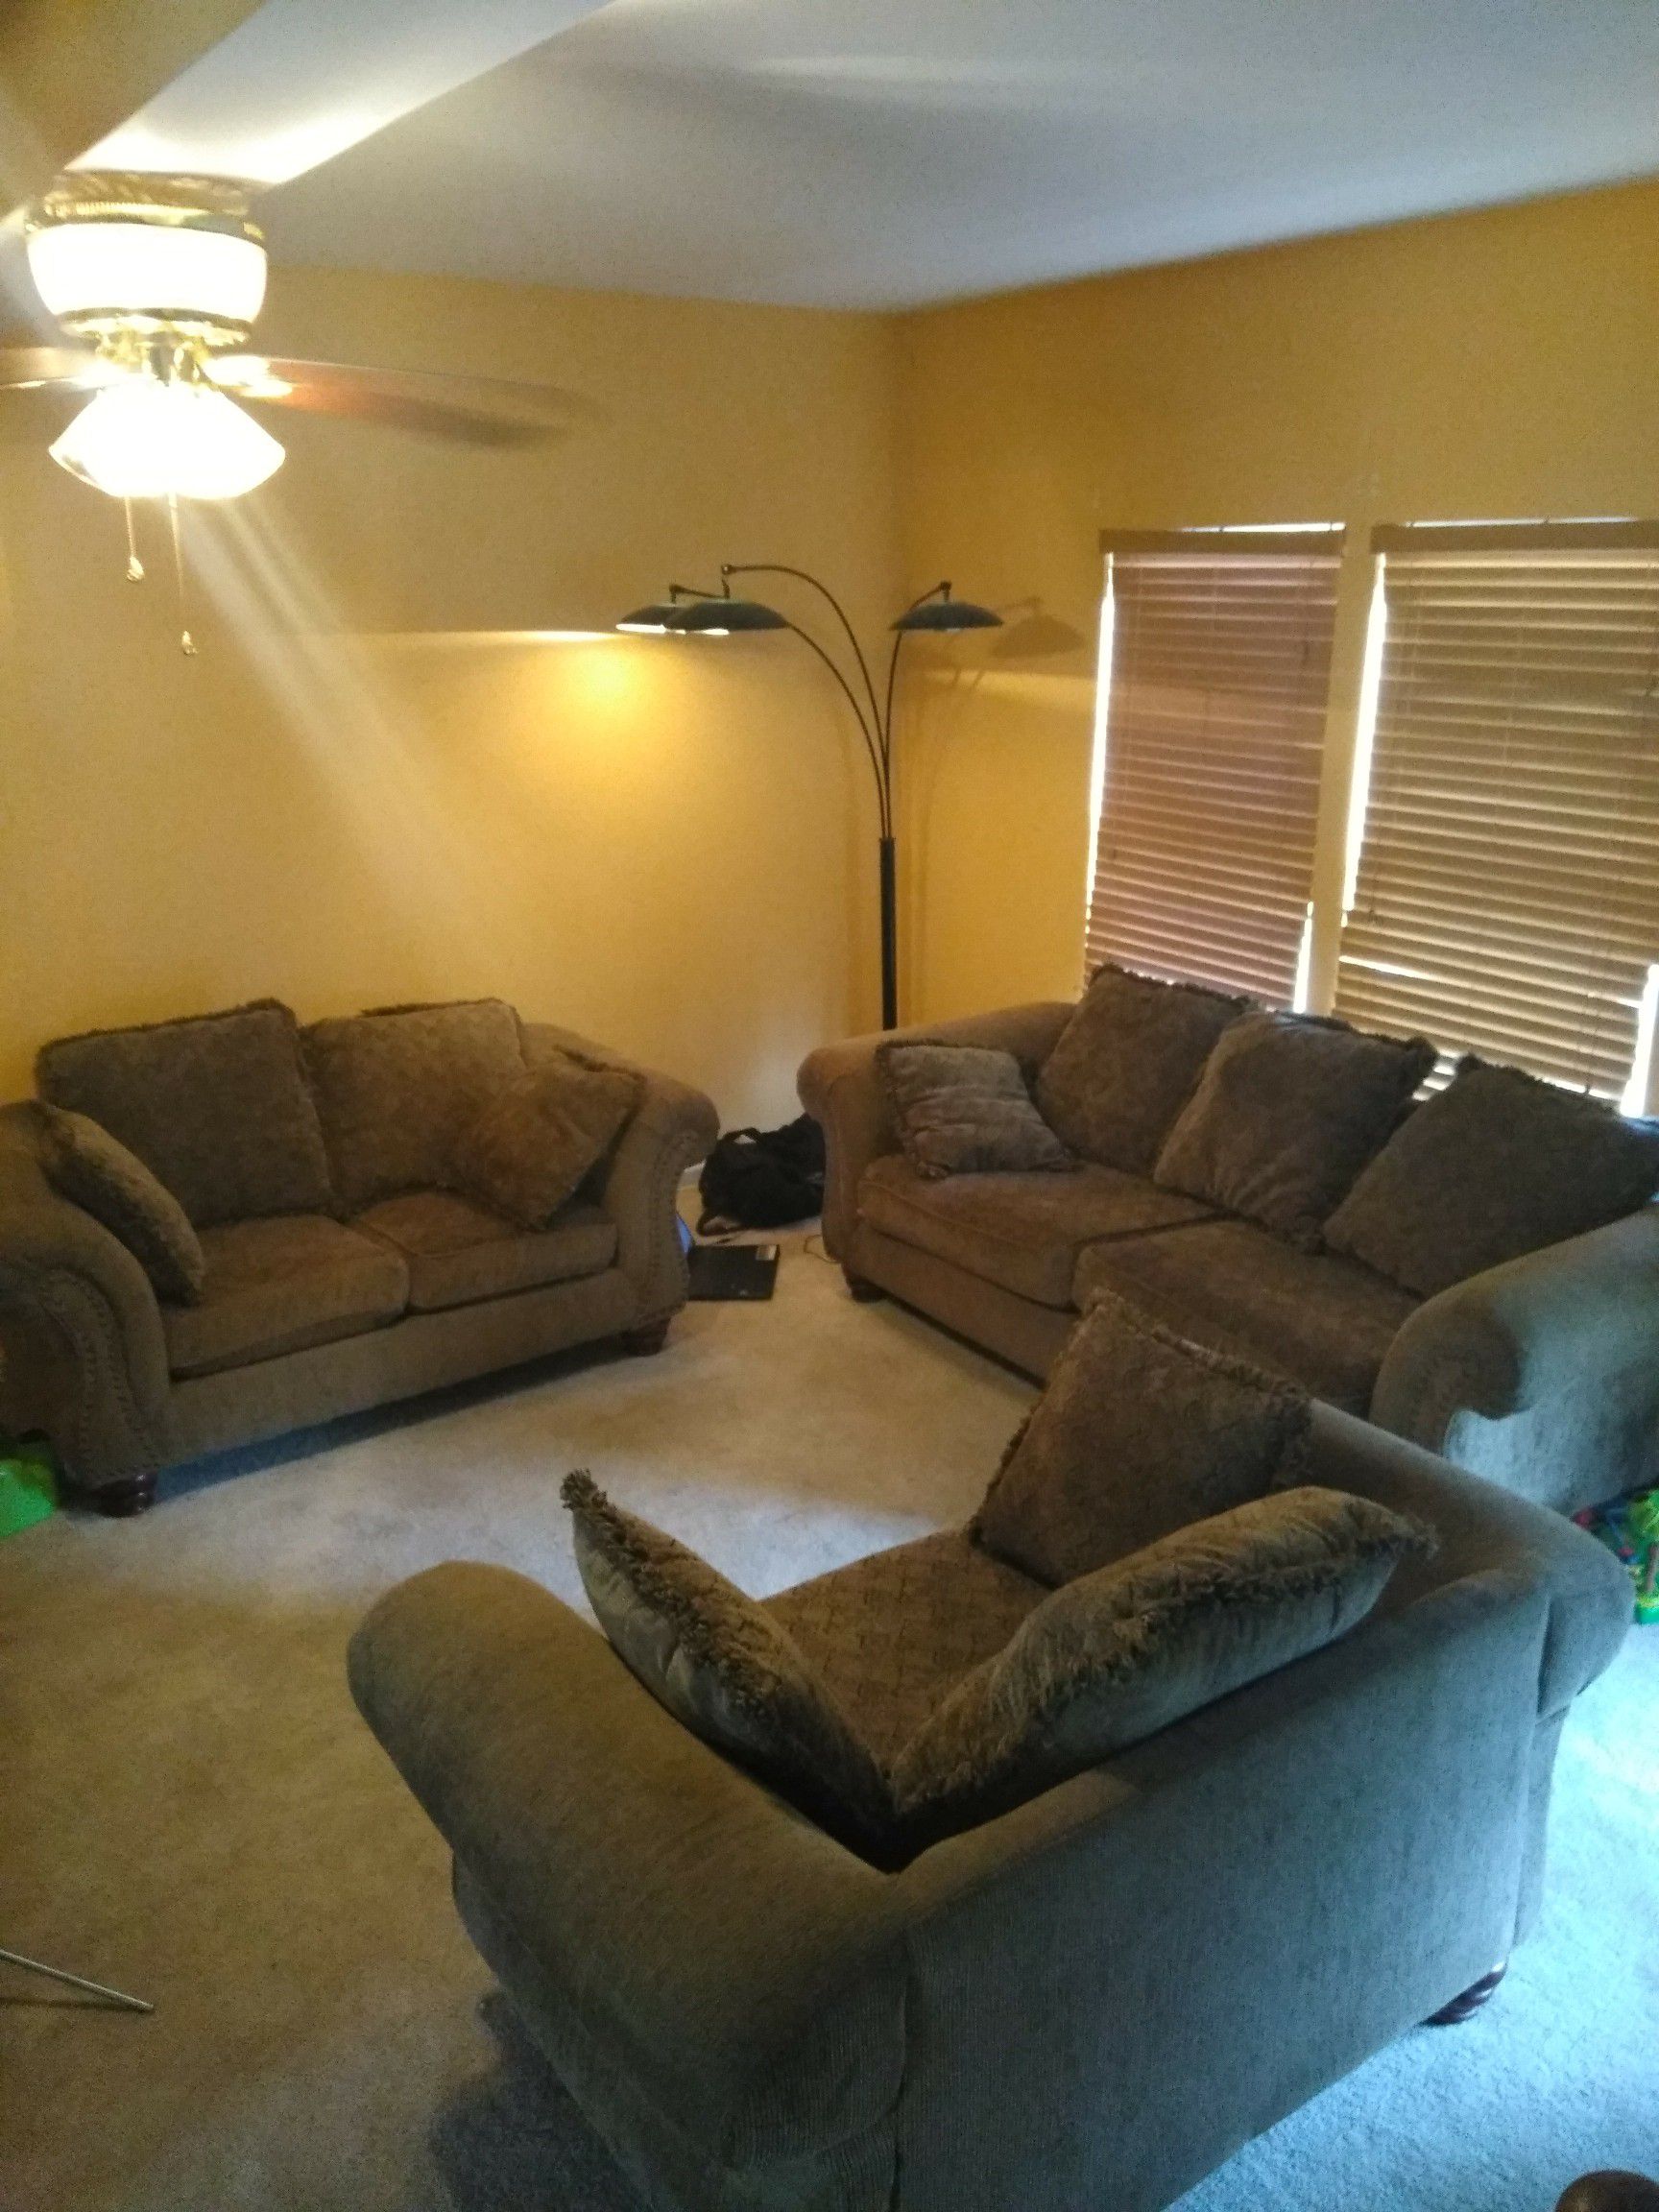 Living room set